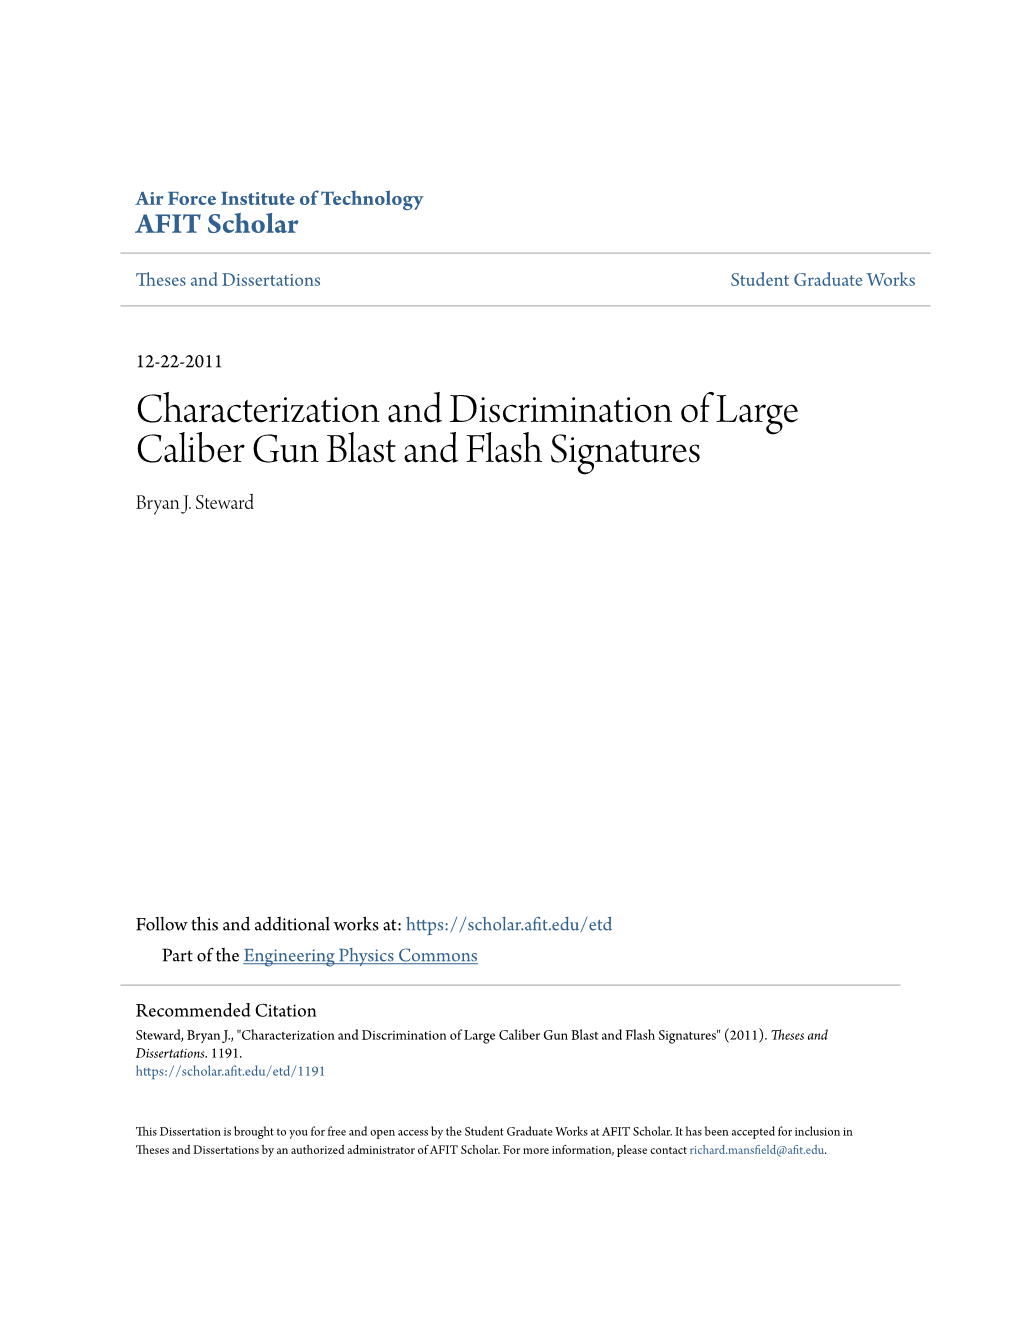 Characterization and Discrimination of Large Caliber Gun Blast and Flash Signatures Bryan J